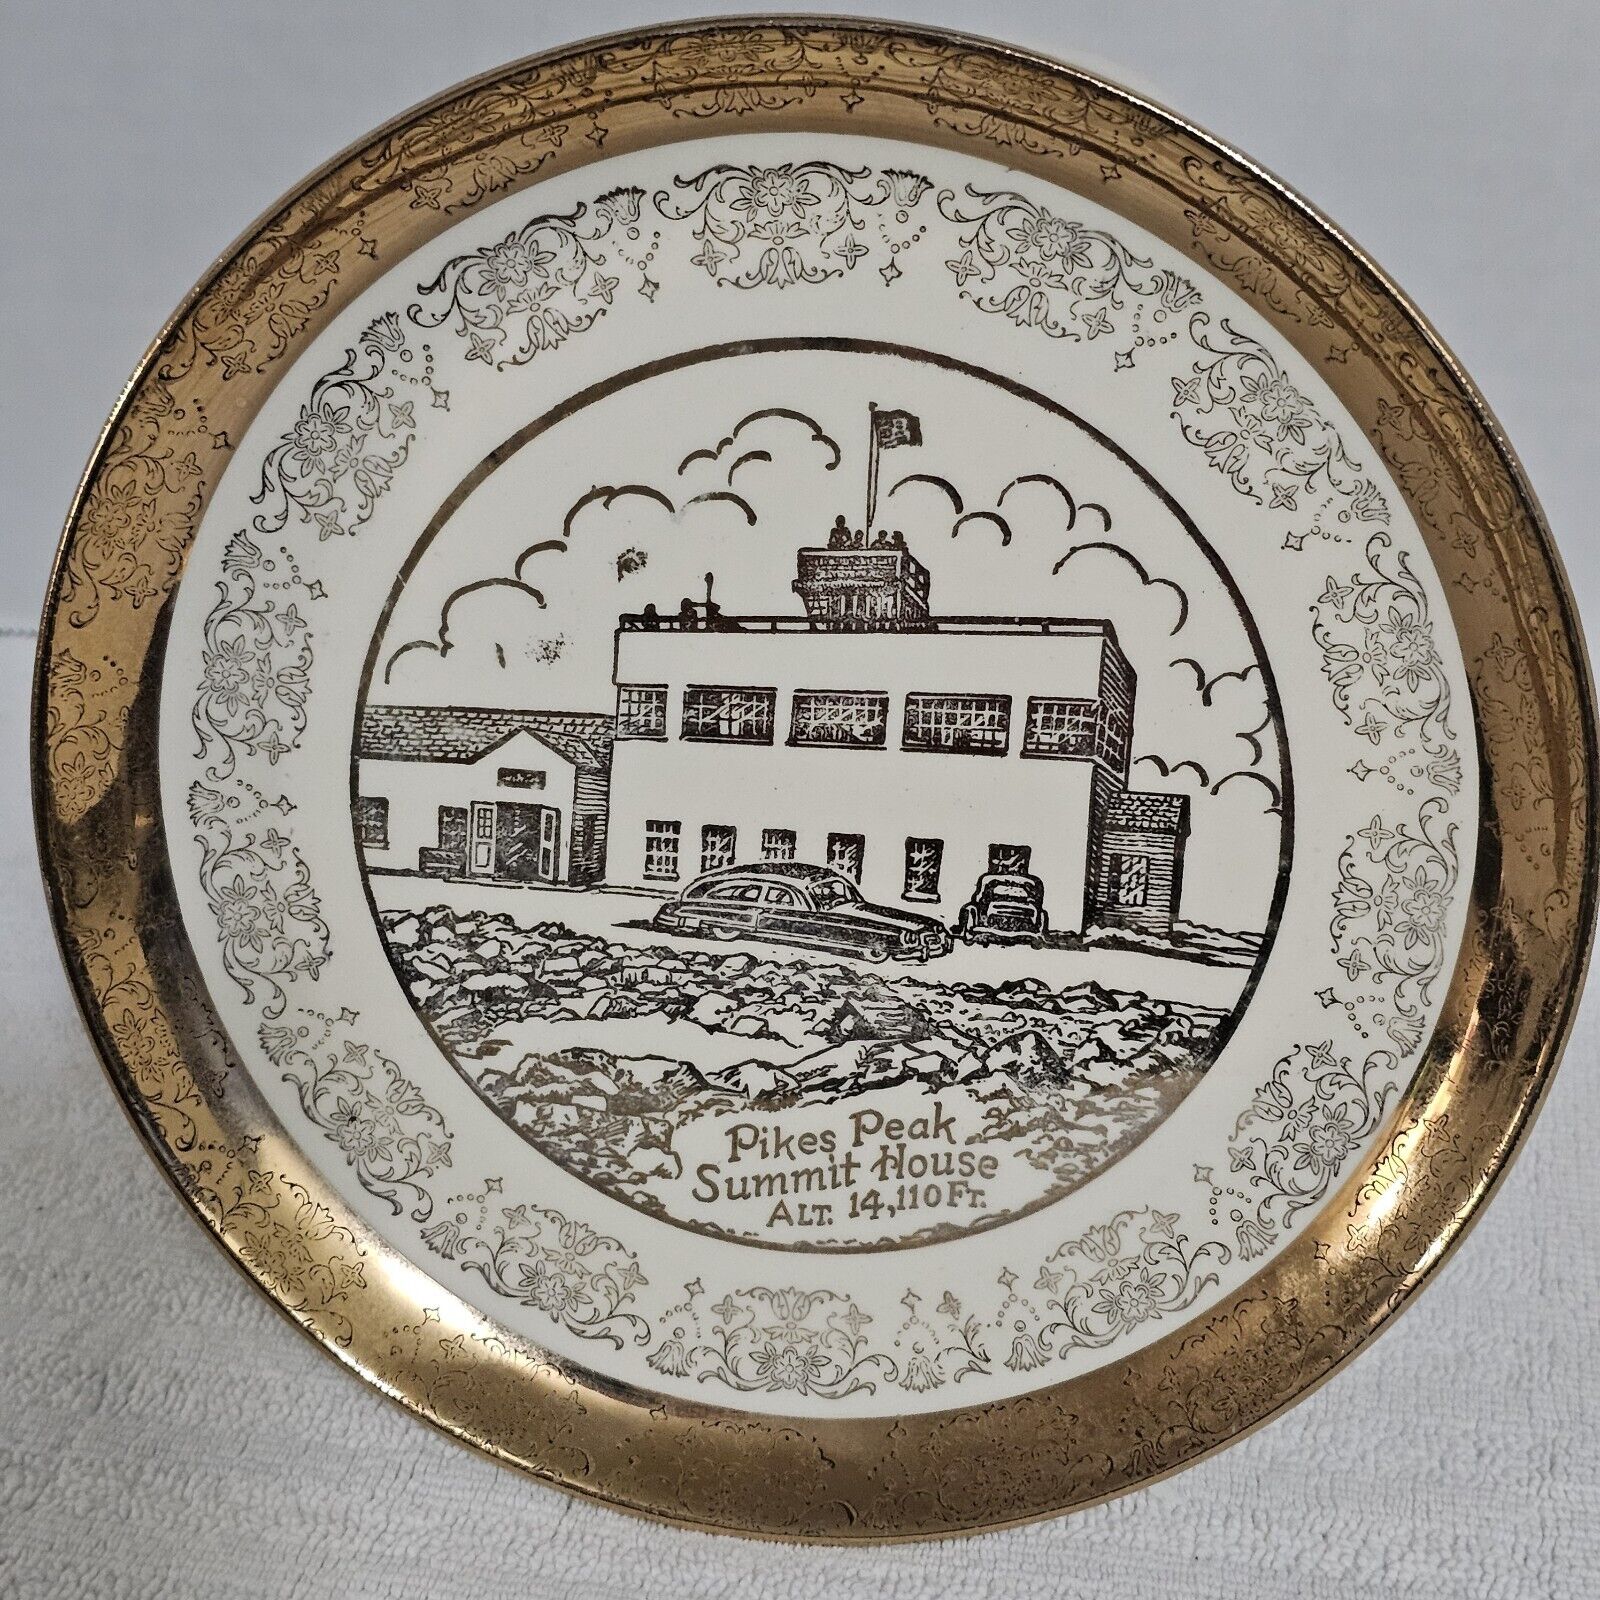 Vintage PIKES PEAK Summit House Colorado Plate - 1940's - gold gilt